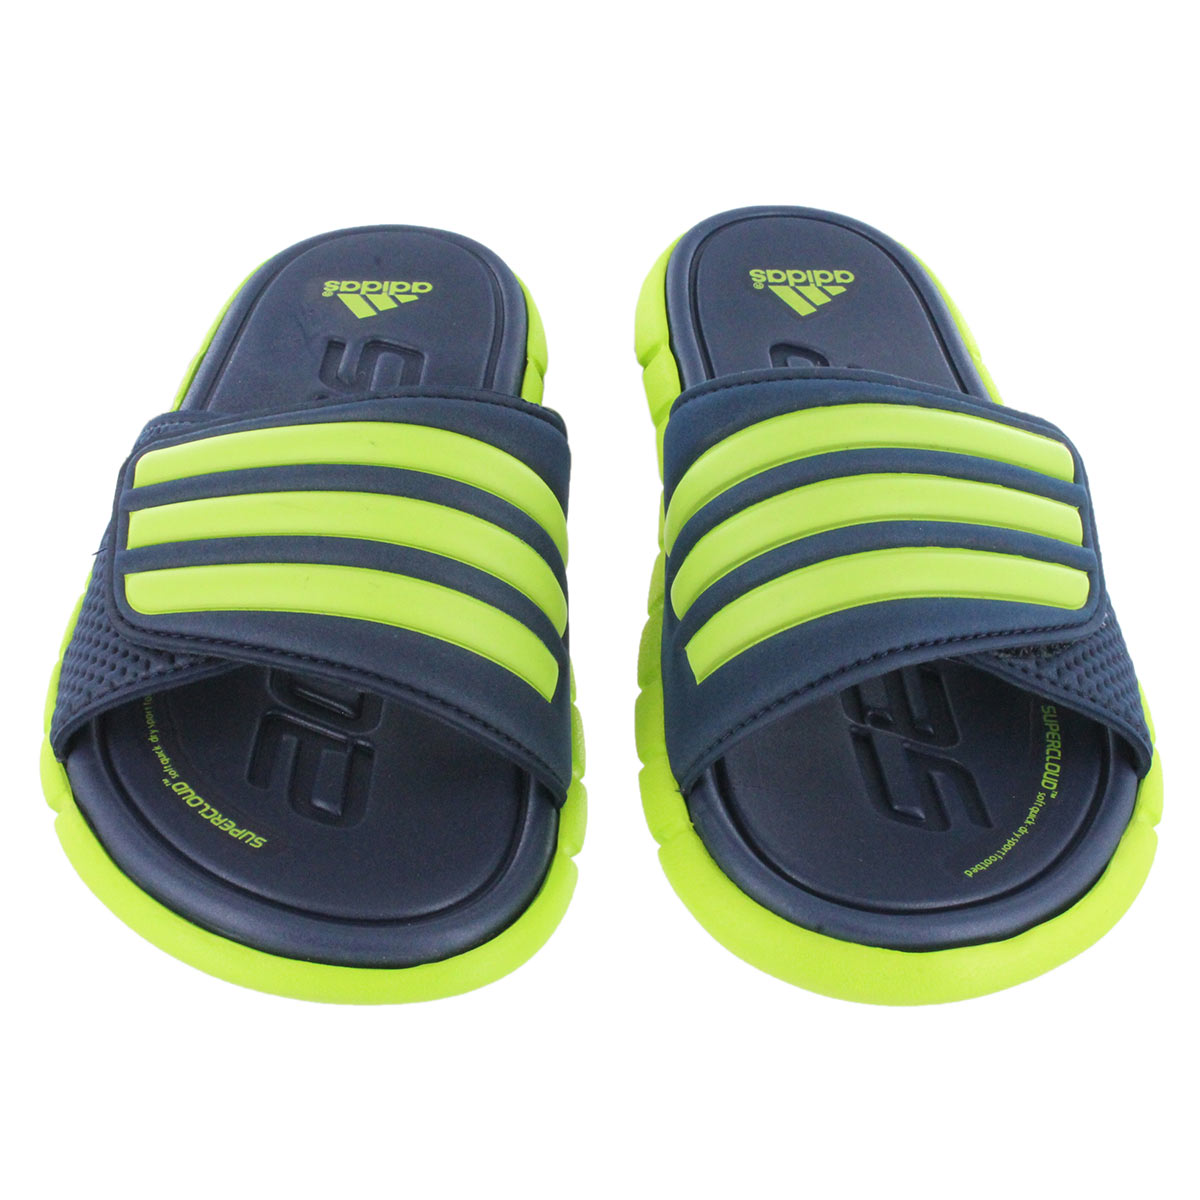 Adidas Boys' ADILIGHT SUPERCLOUD navylime slide sandals D65243